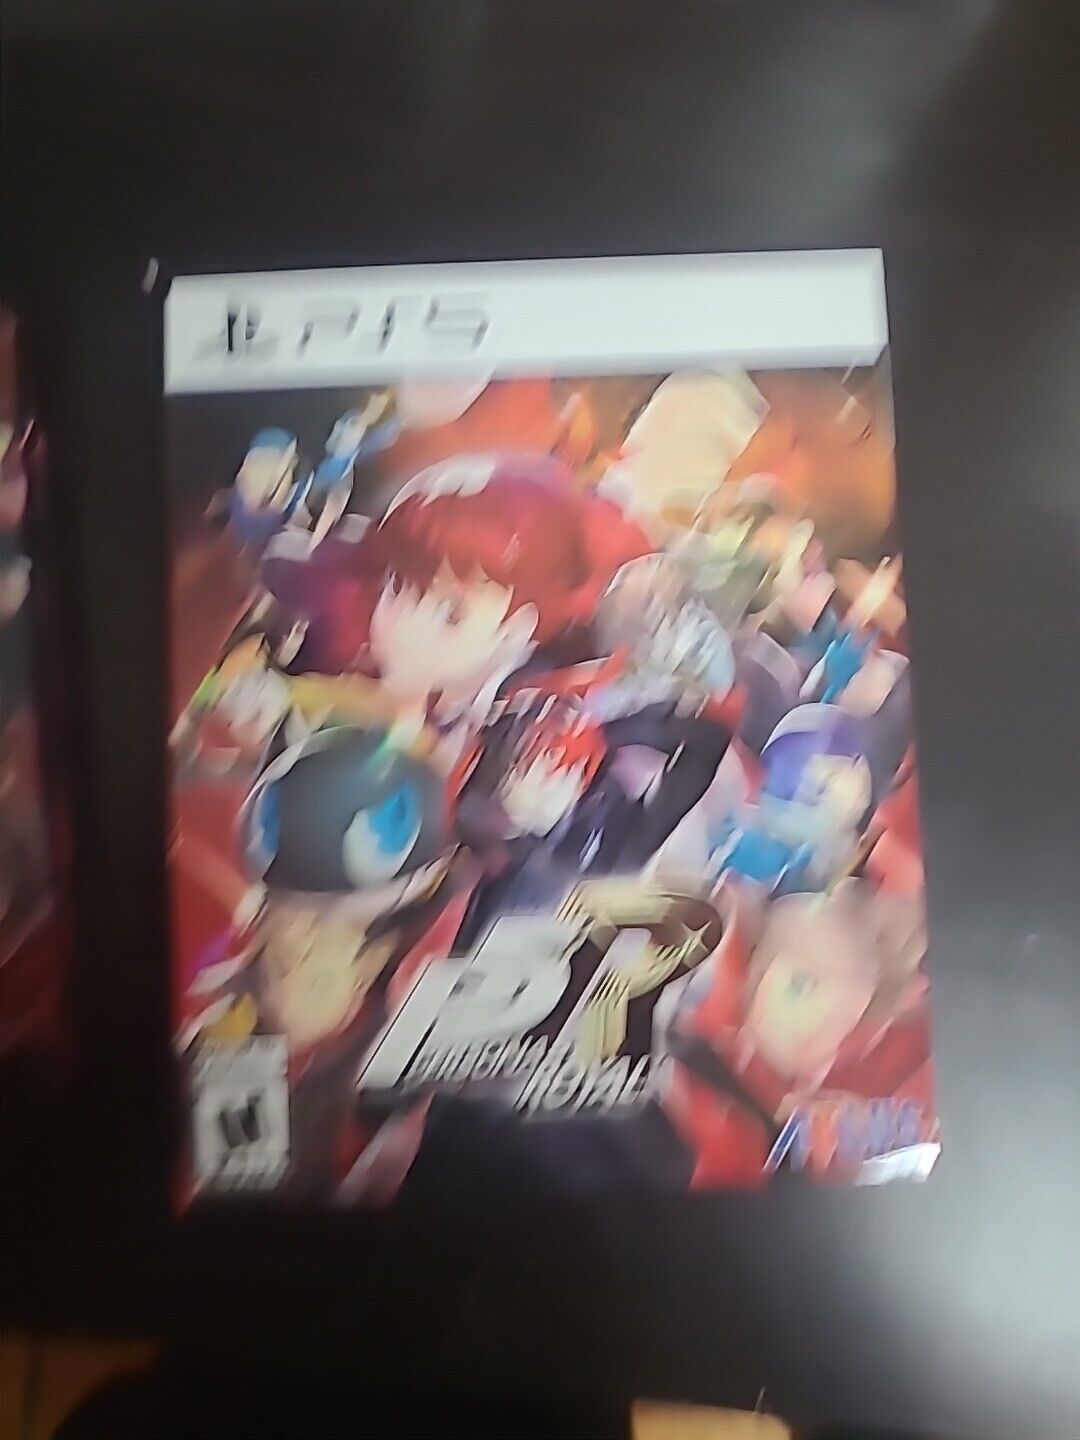 Persona 5 Royal: Steelbook Launch Edition - Sony PlayStation 4